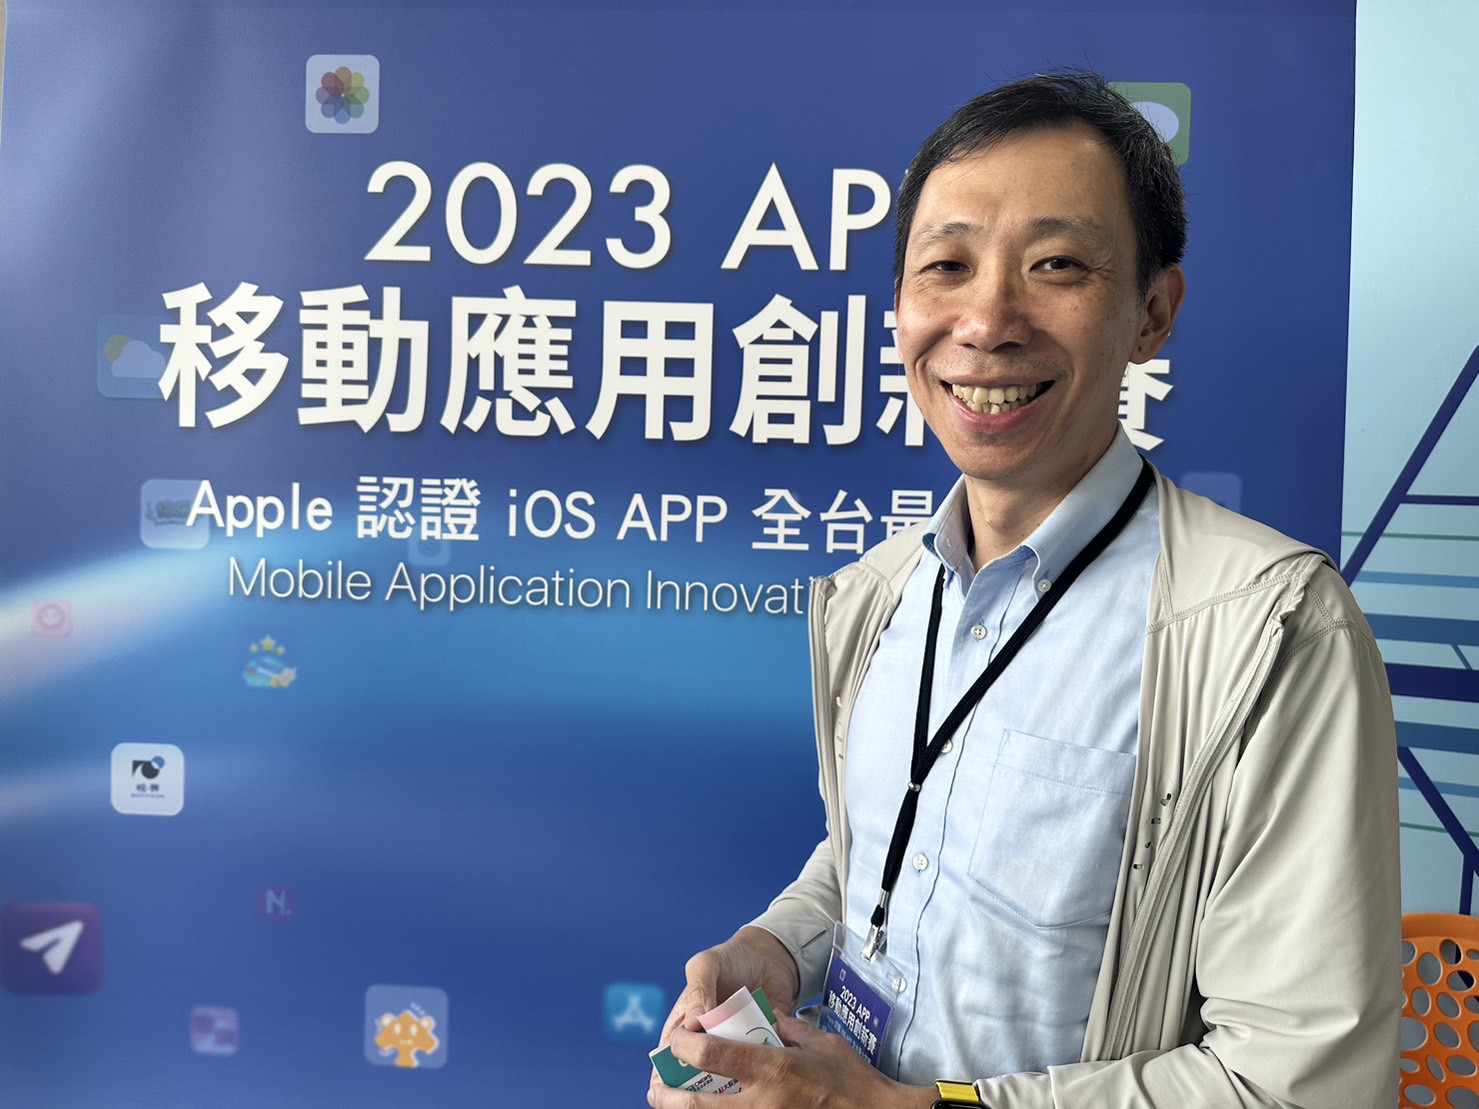 【2023 APP 移動應用創新賽】全台最大Apple iOS App競賽登場 評審長王志強揭本屆開發者與前屆2差異 297